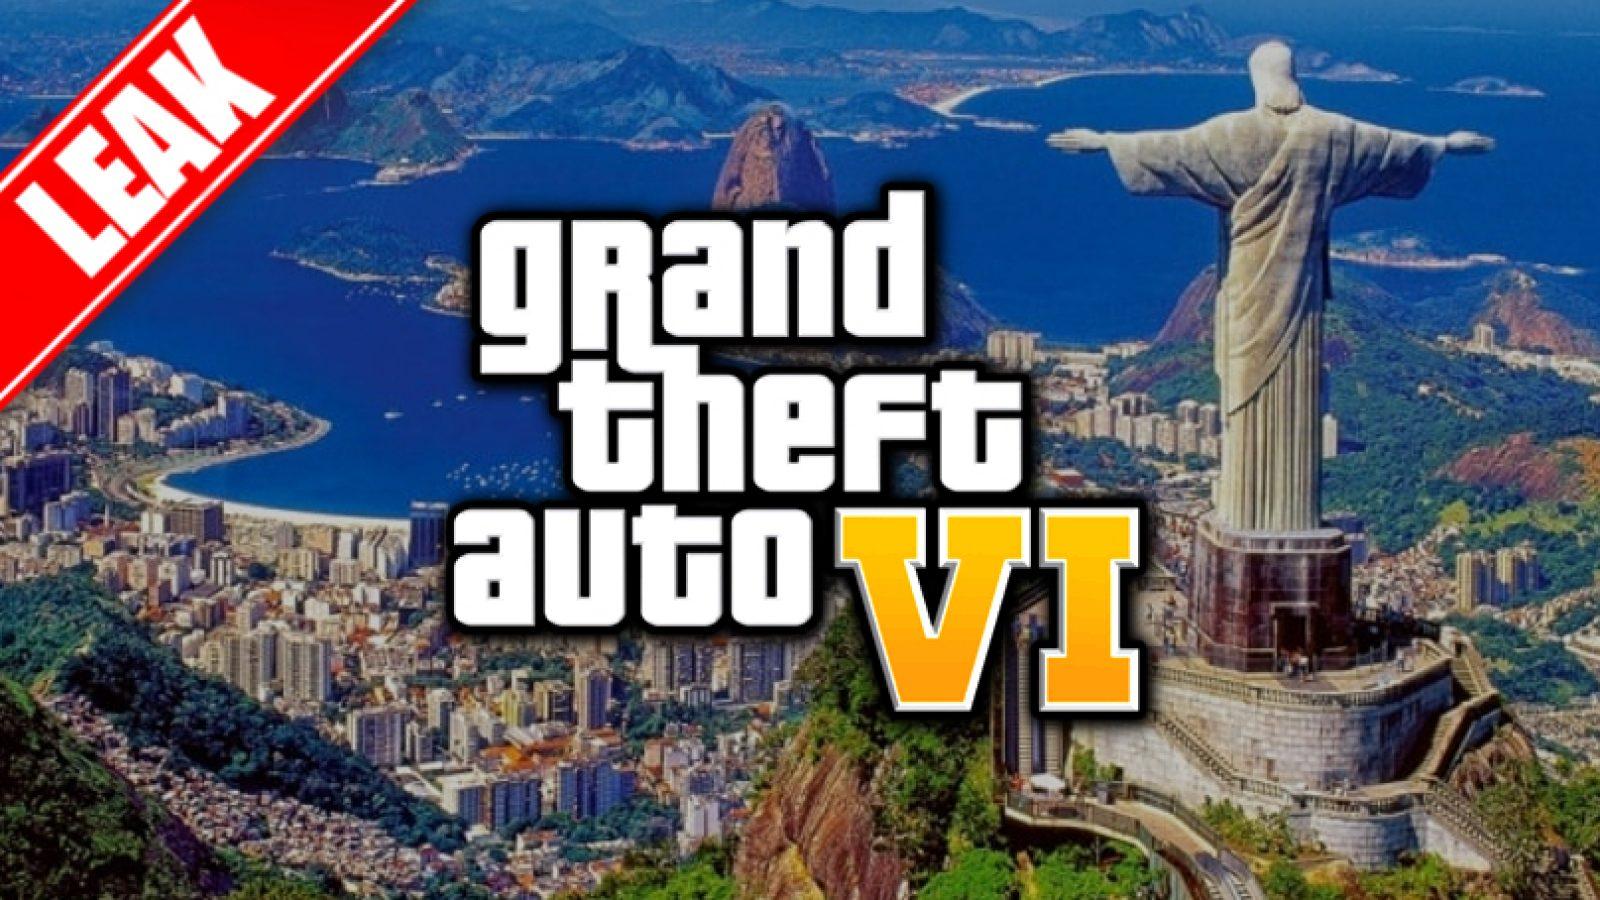 GTA VI reddit leak allegedly discloses gameplay details, release